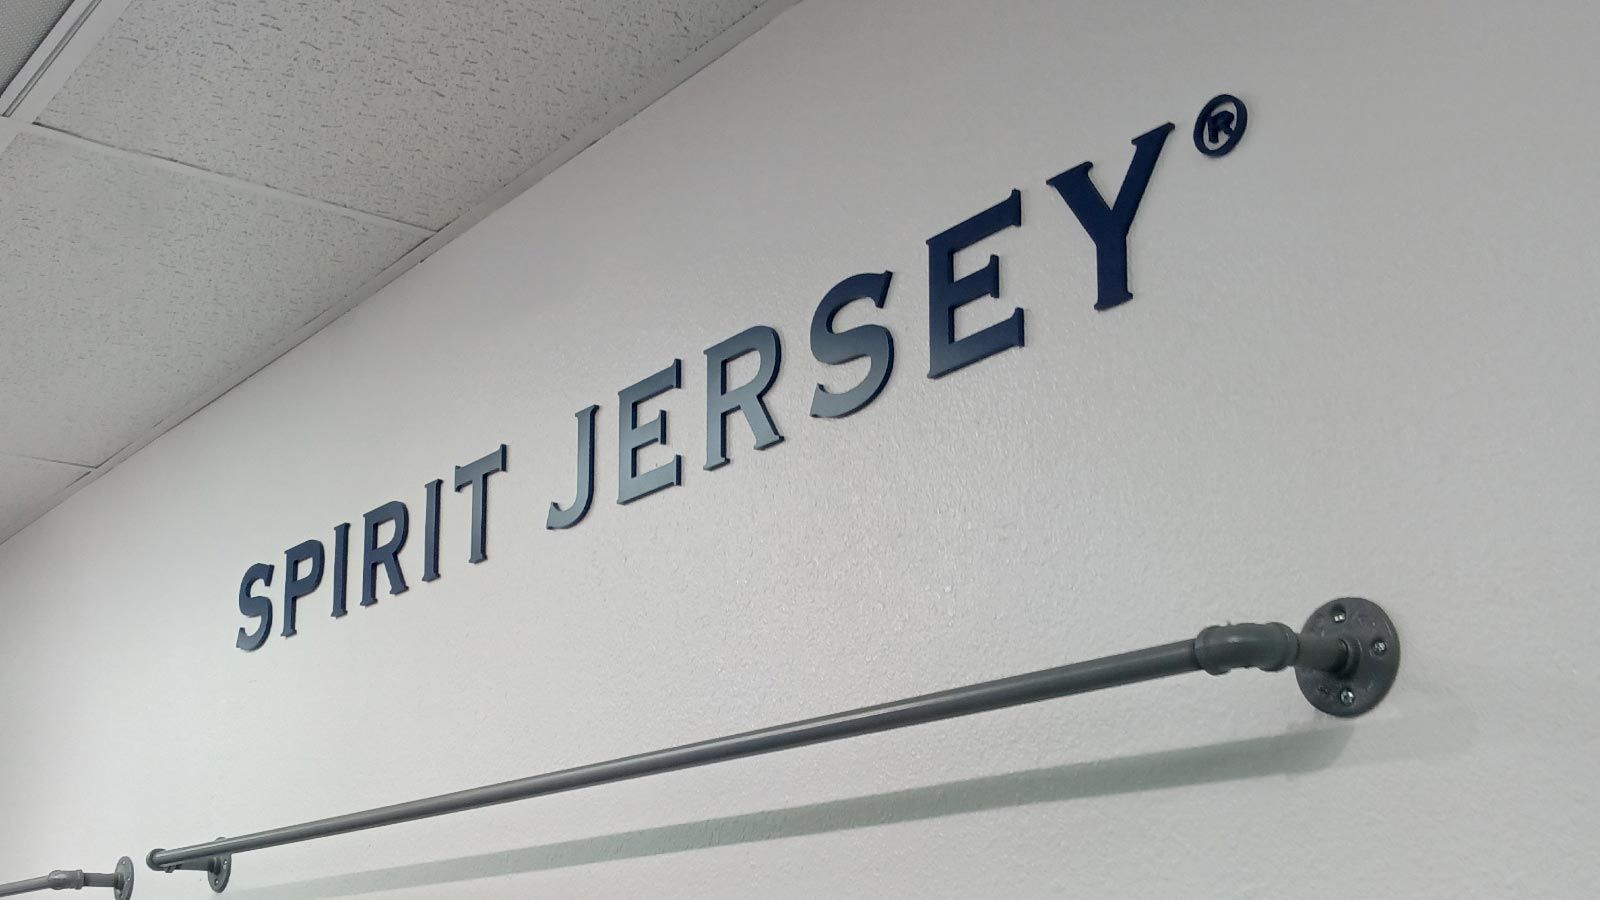 spirit jersey interior acrylic lettering